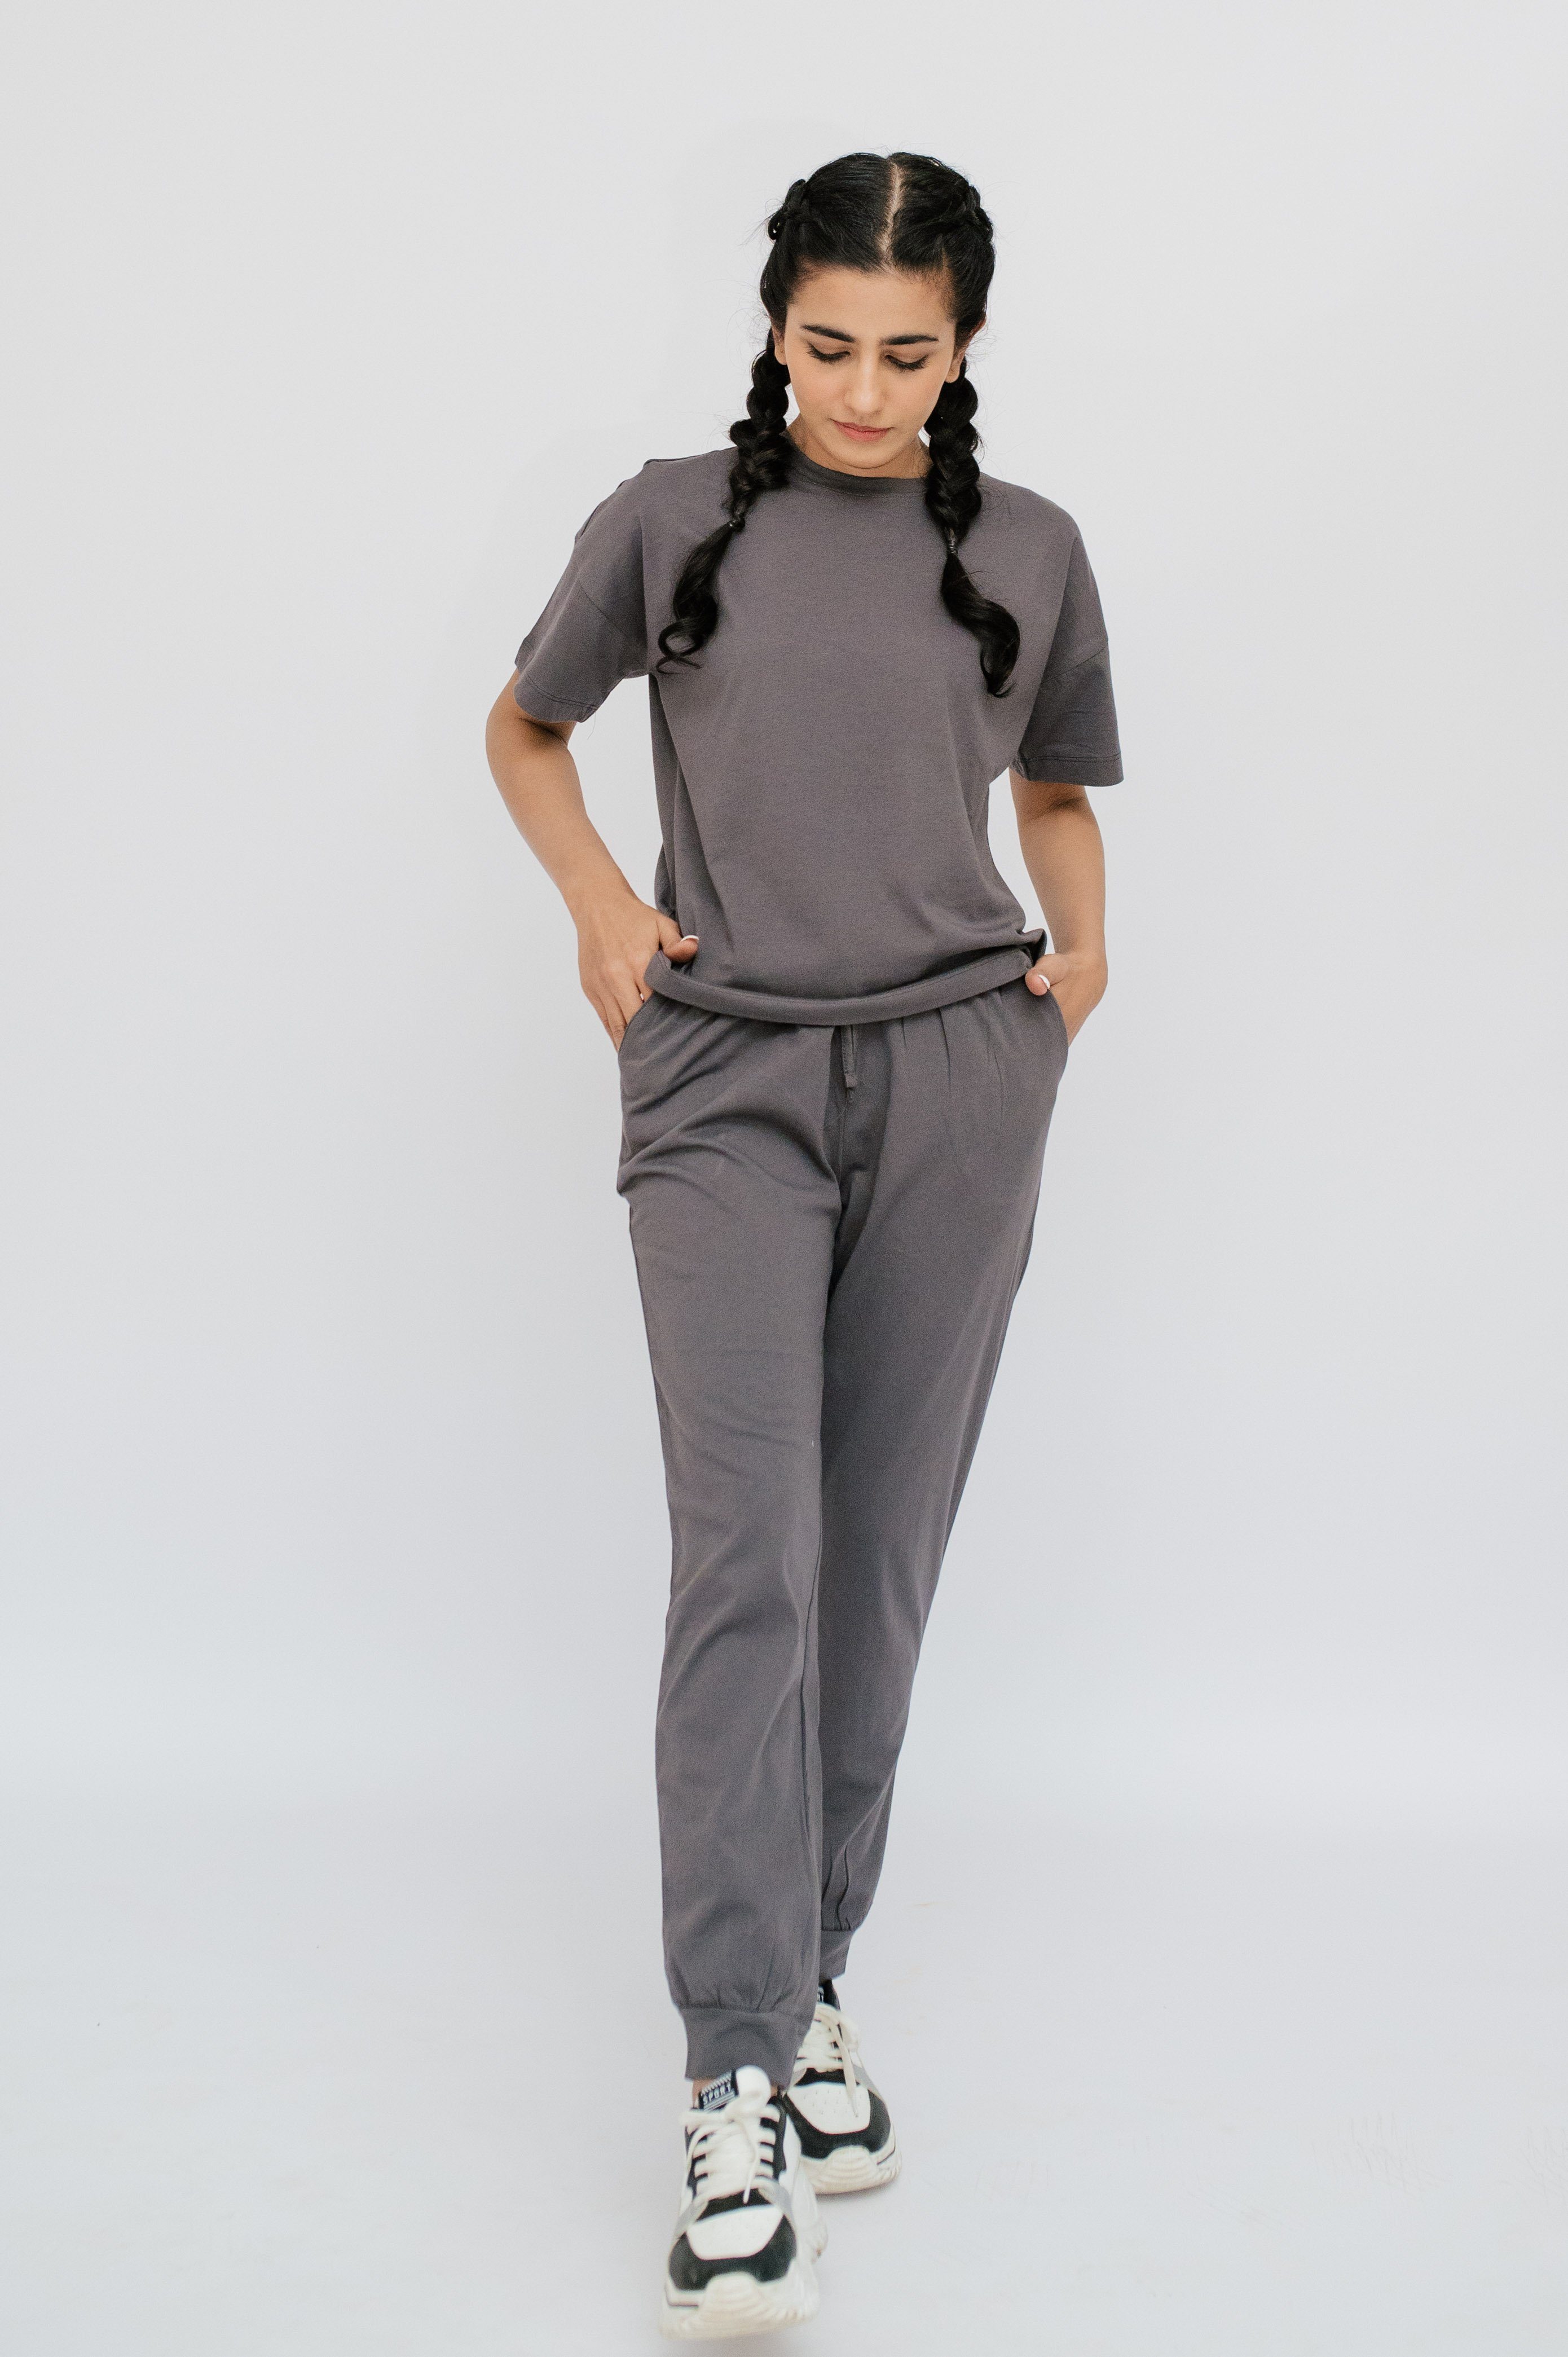 OFF Stück) (2 SNOOZE Loungewear 1 Set in tlg., Pyjama grau